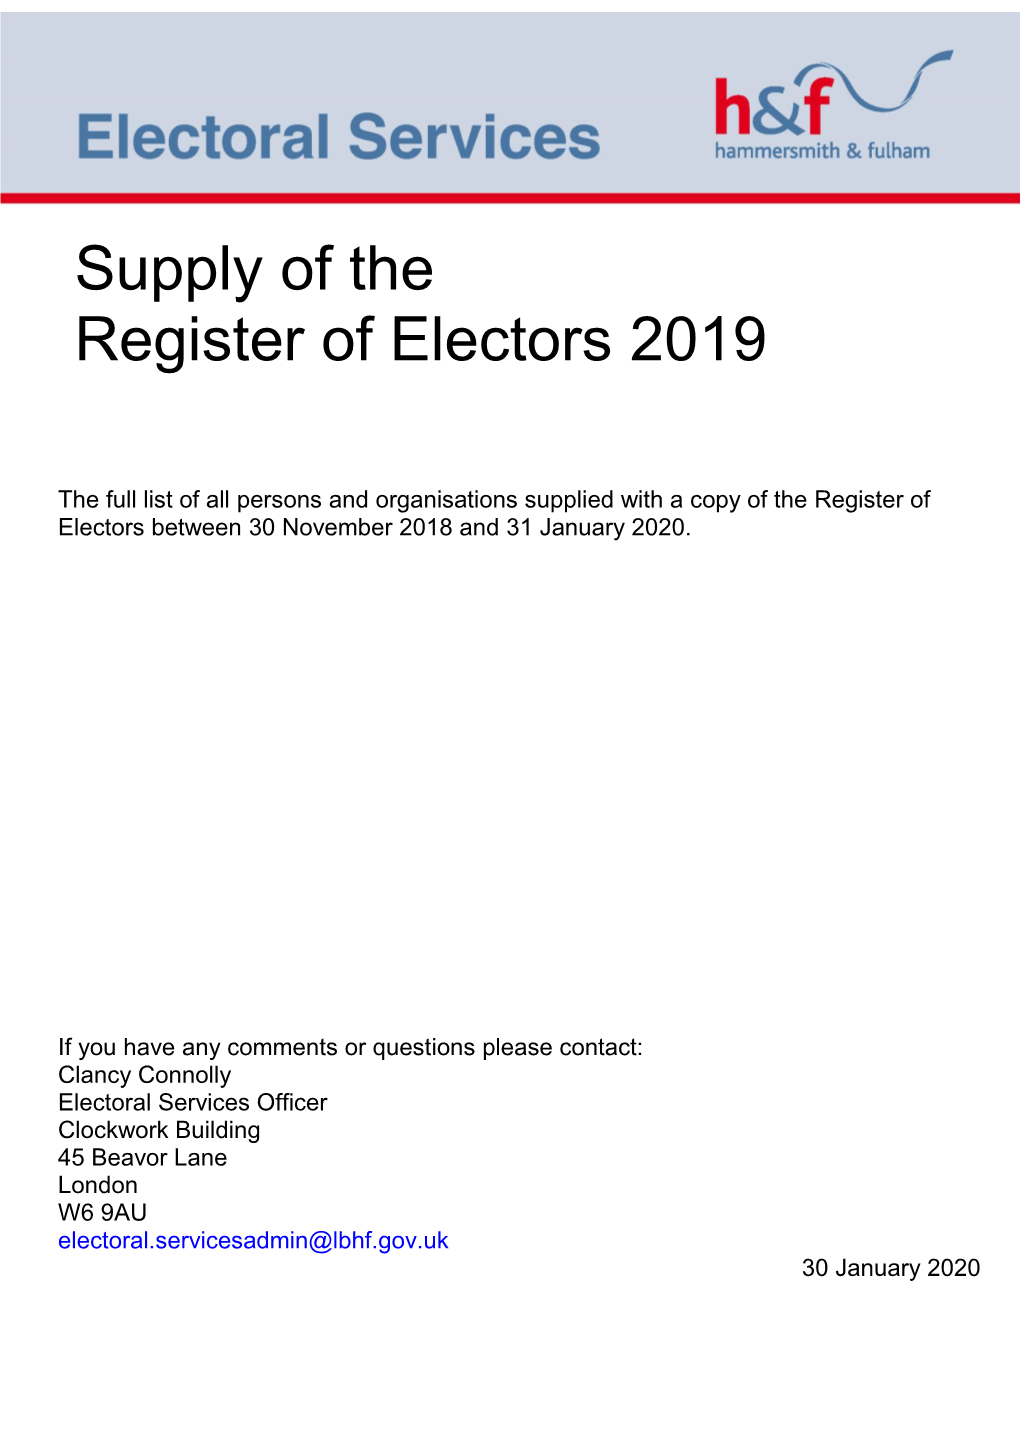 Supply of the Register of Electors 2019 (Pdf 200KB)